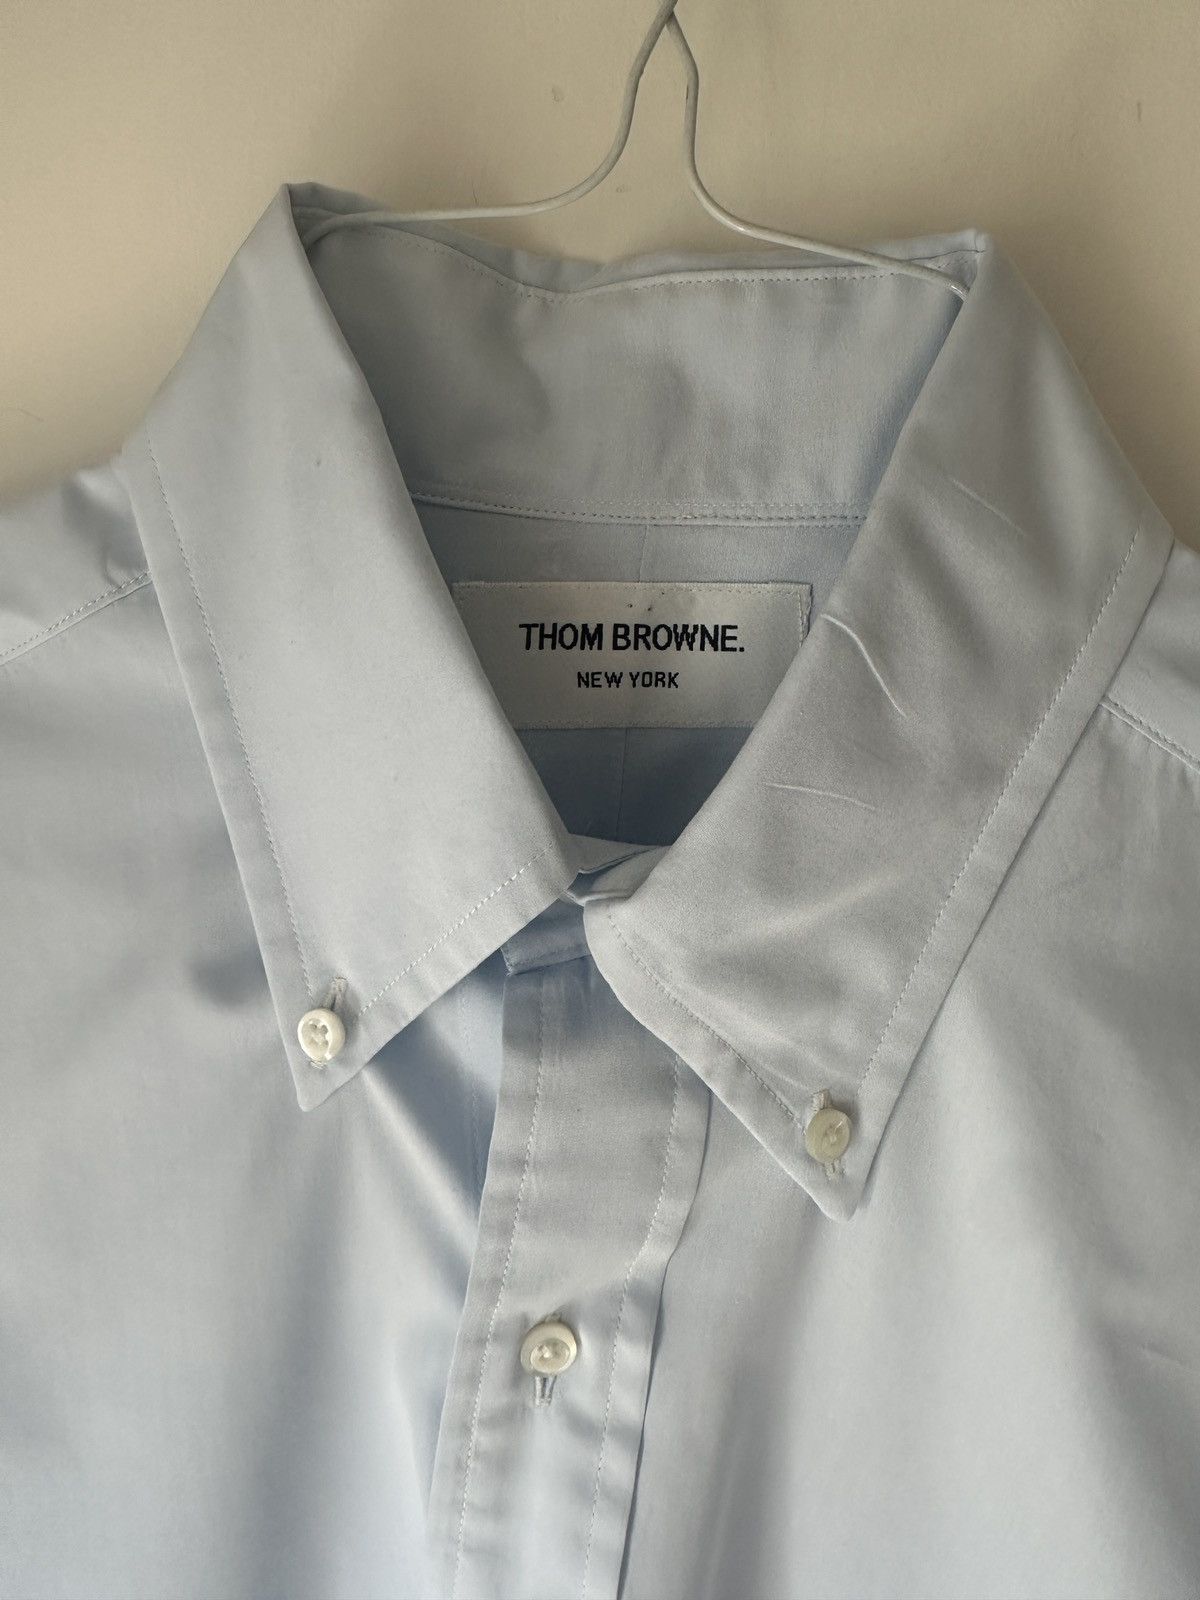 Thom Browne Light Blue Dress Shirt Size 1 - 2